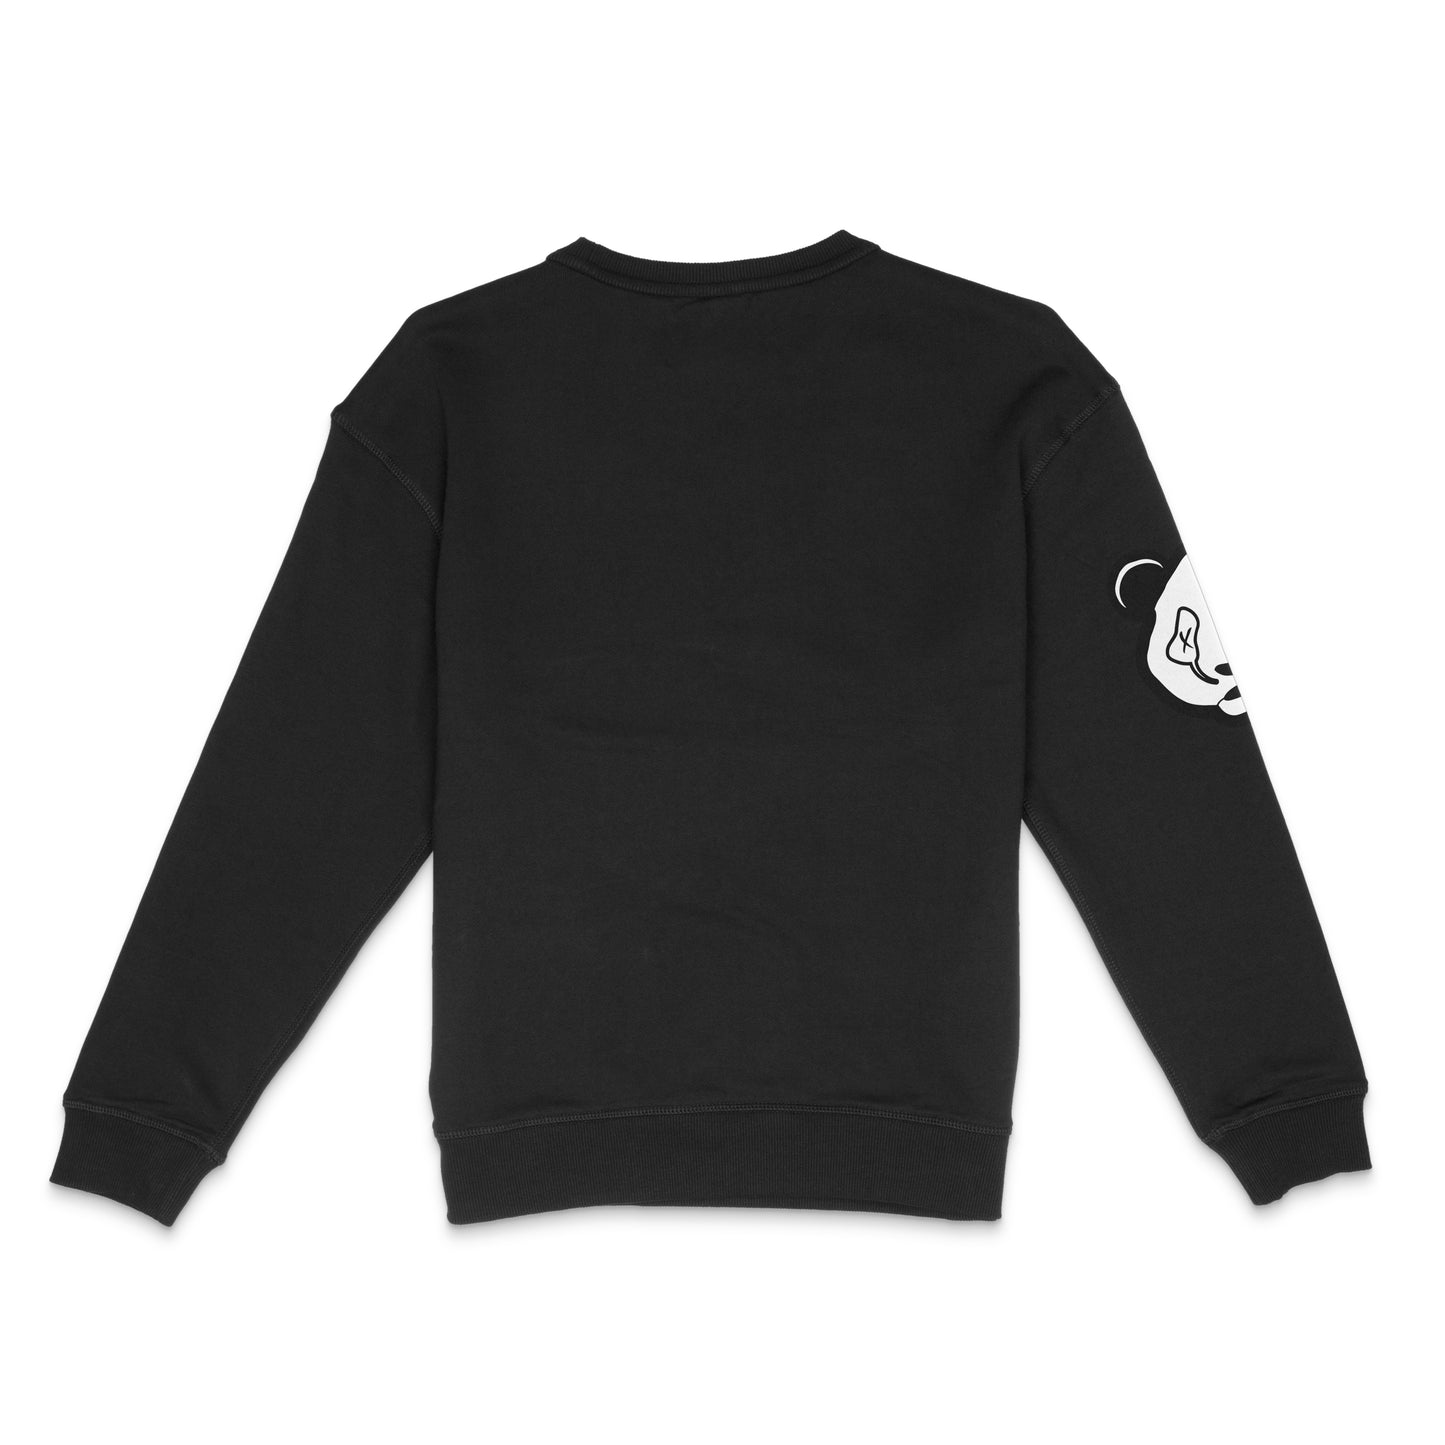 No Grey - Premium Sweatshirt (Black)